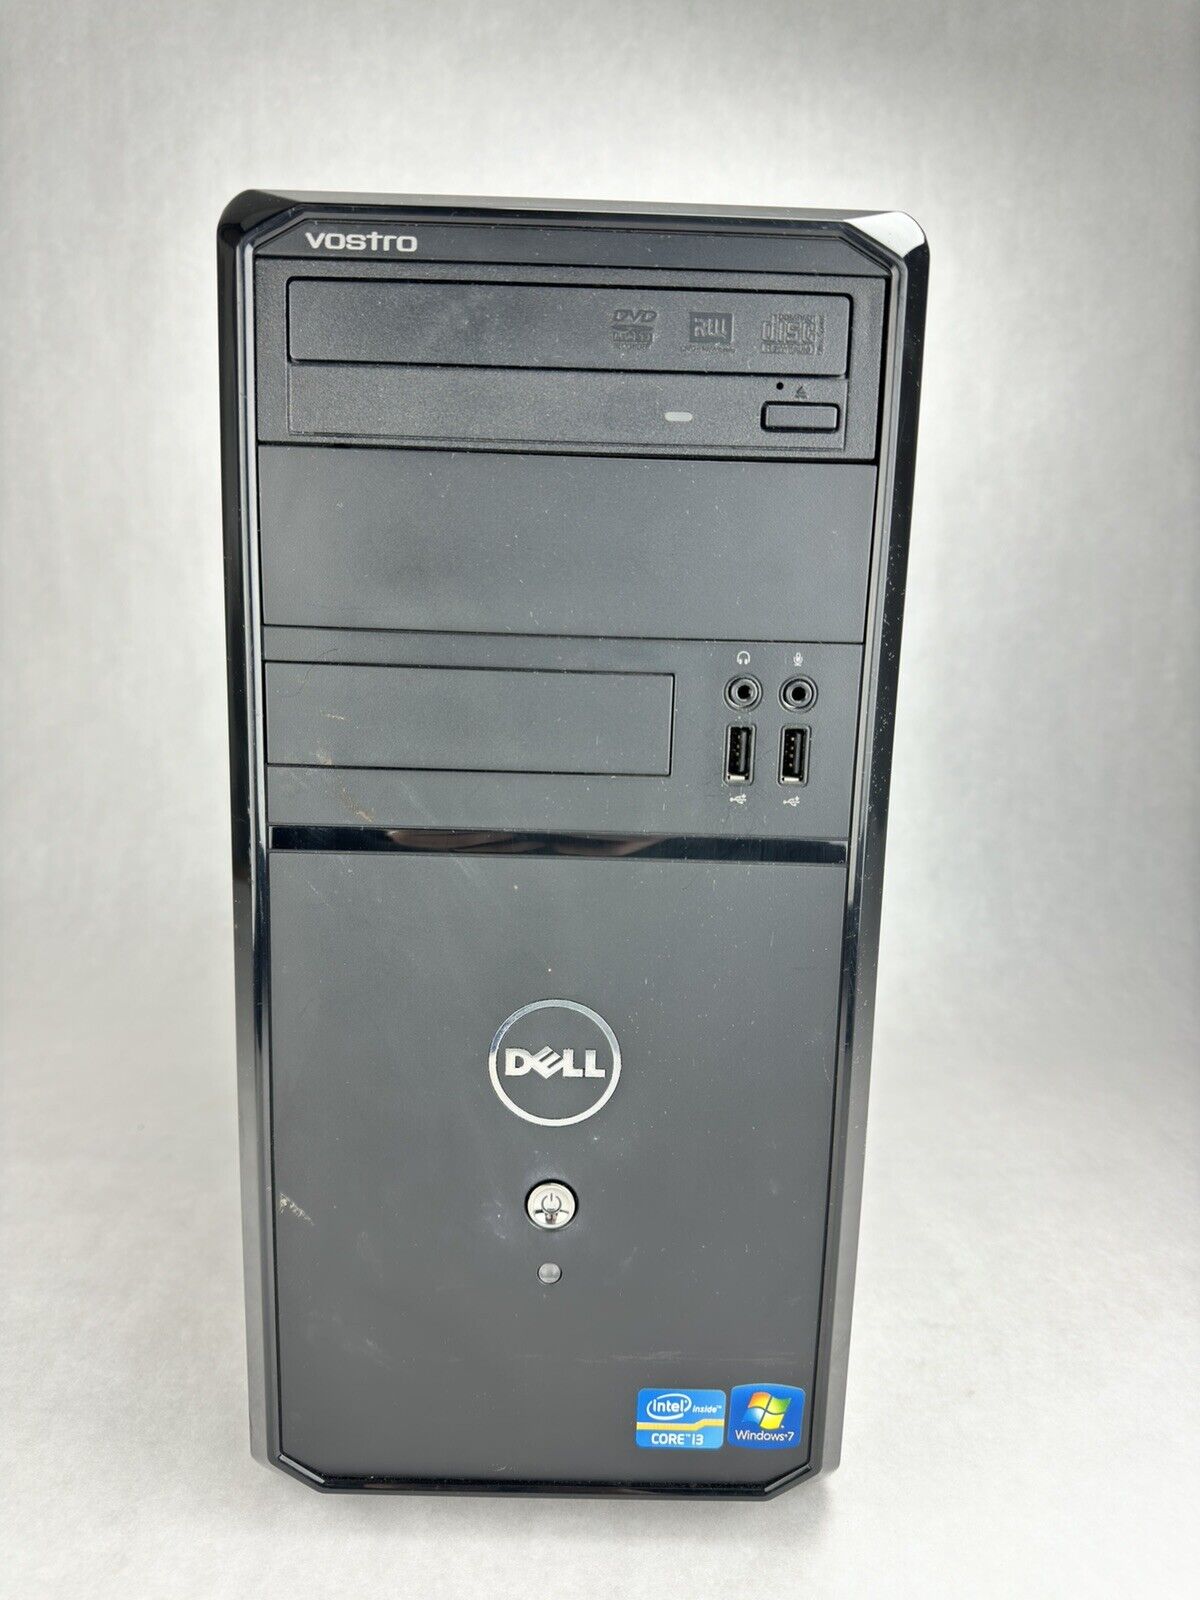 Dell Vostro 260 MT Intel Core i3-2100 3.1GHz 4GB RAM No HDD No OS